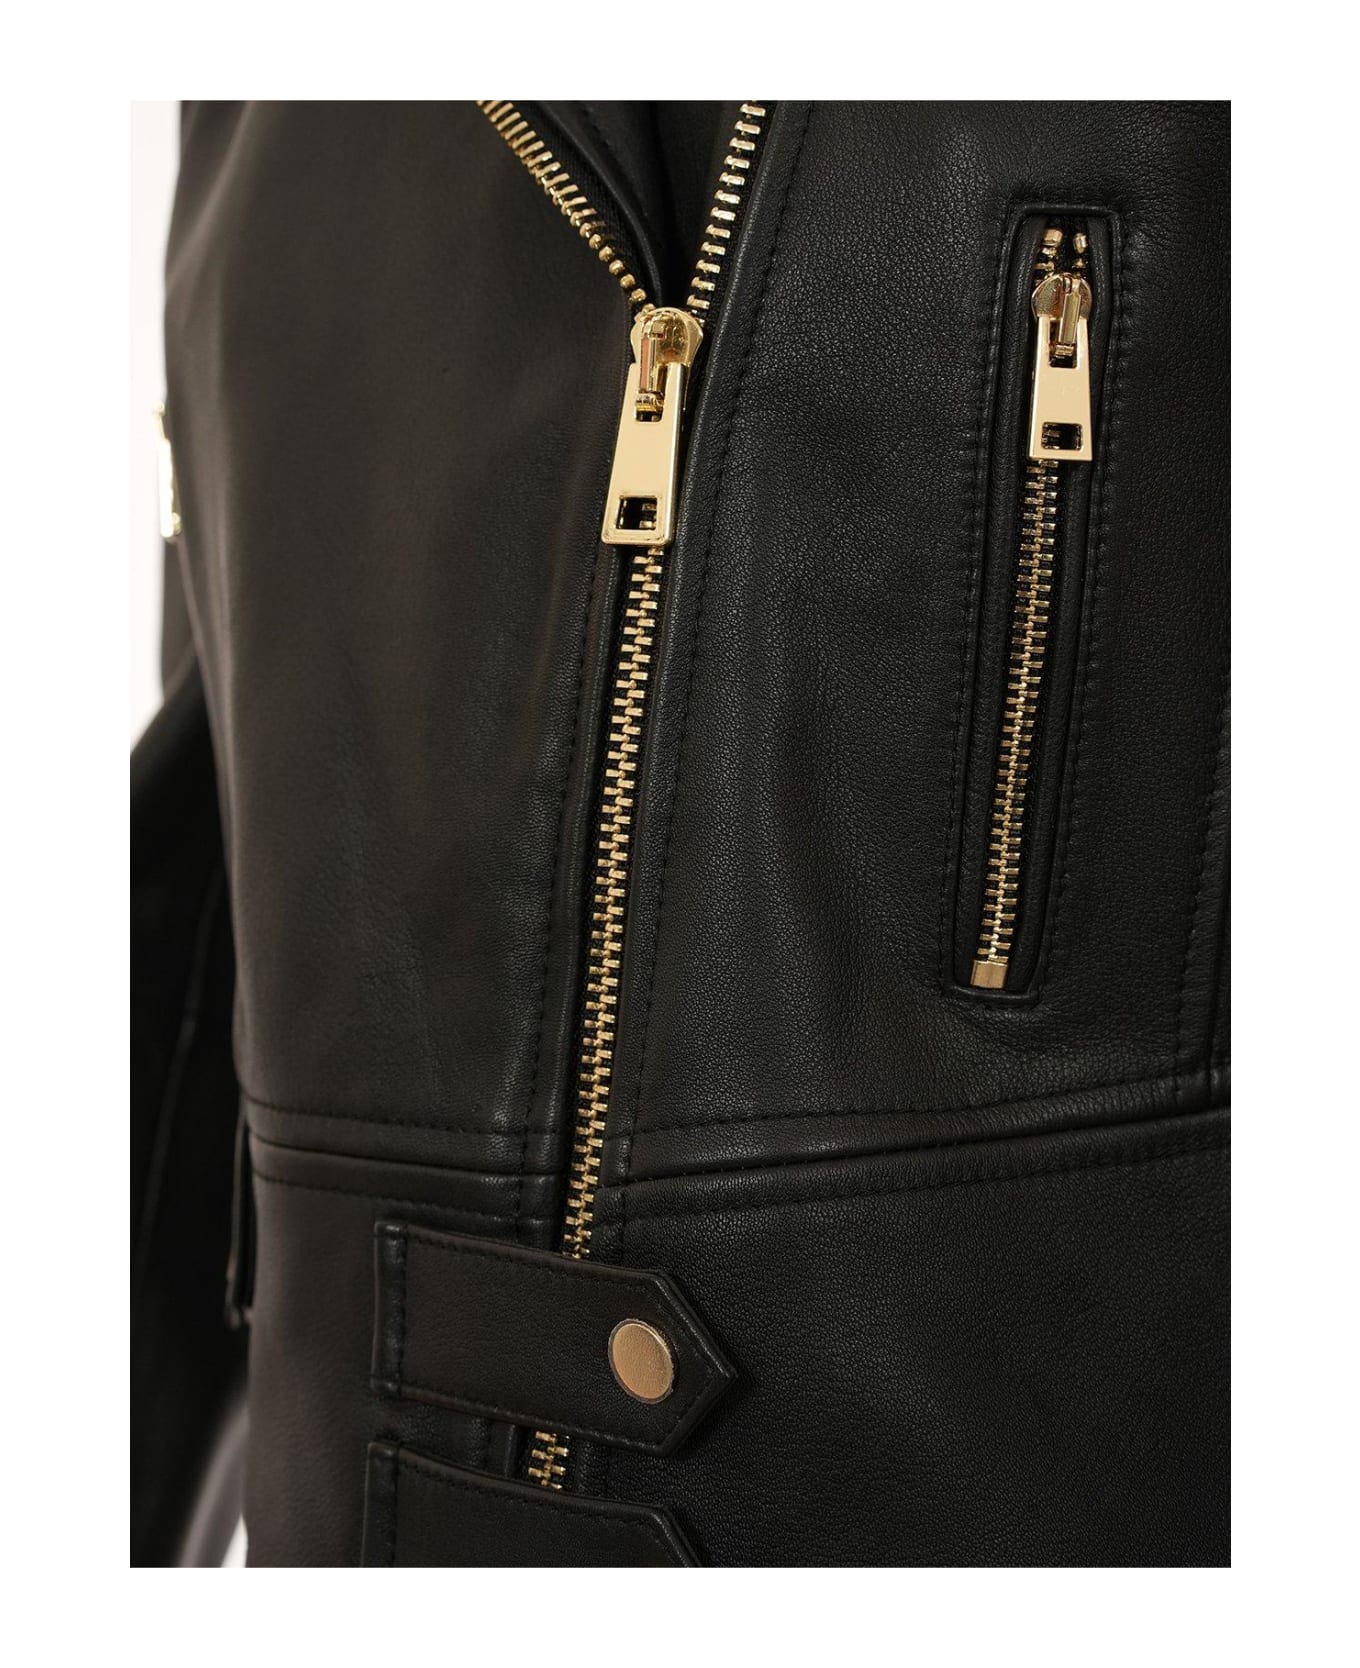 Pinko Sensibile Biker Jacket In Leather - NERO LIMOUSINE (Black)